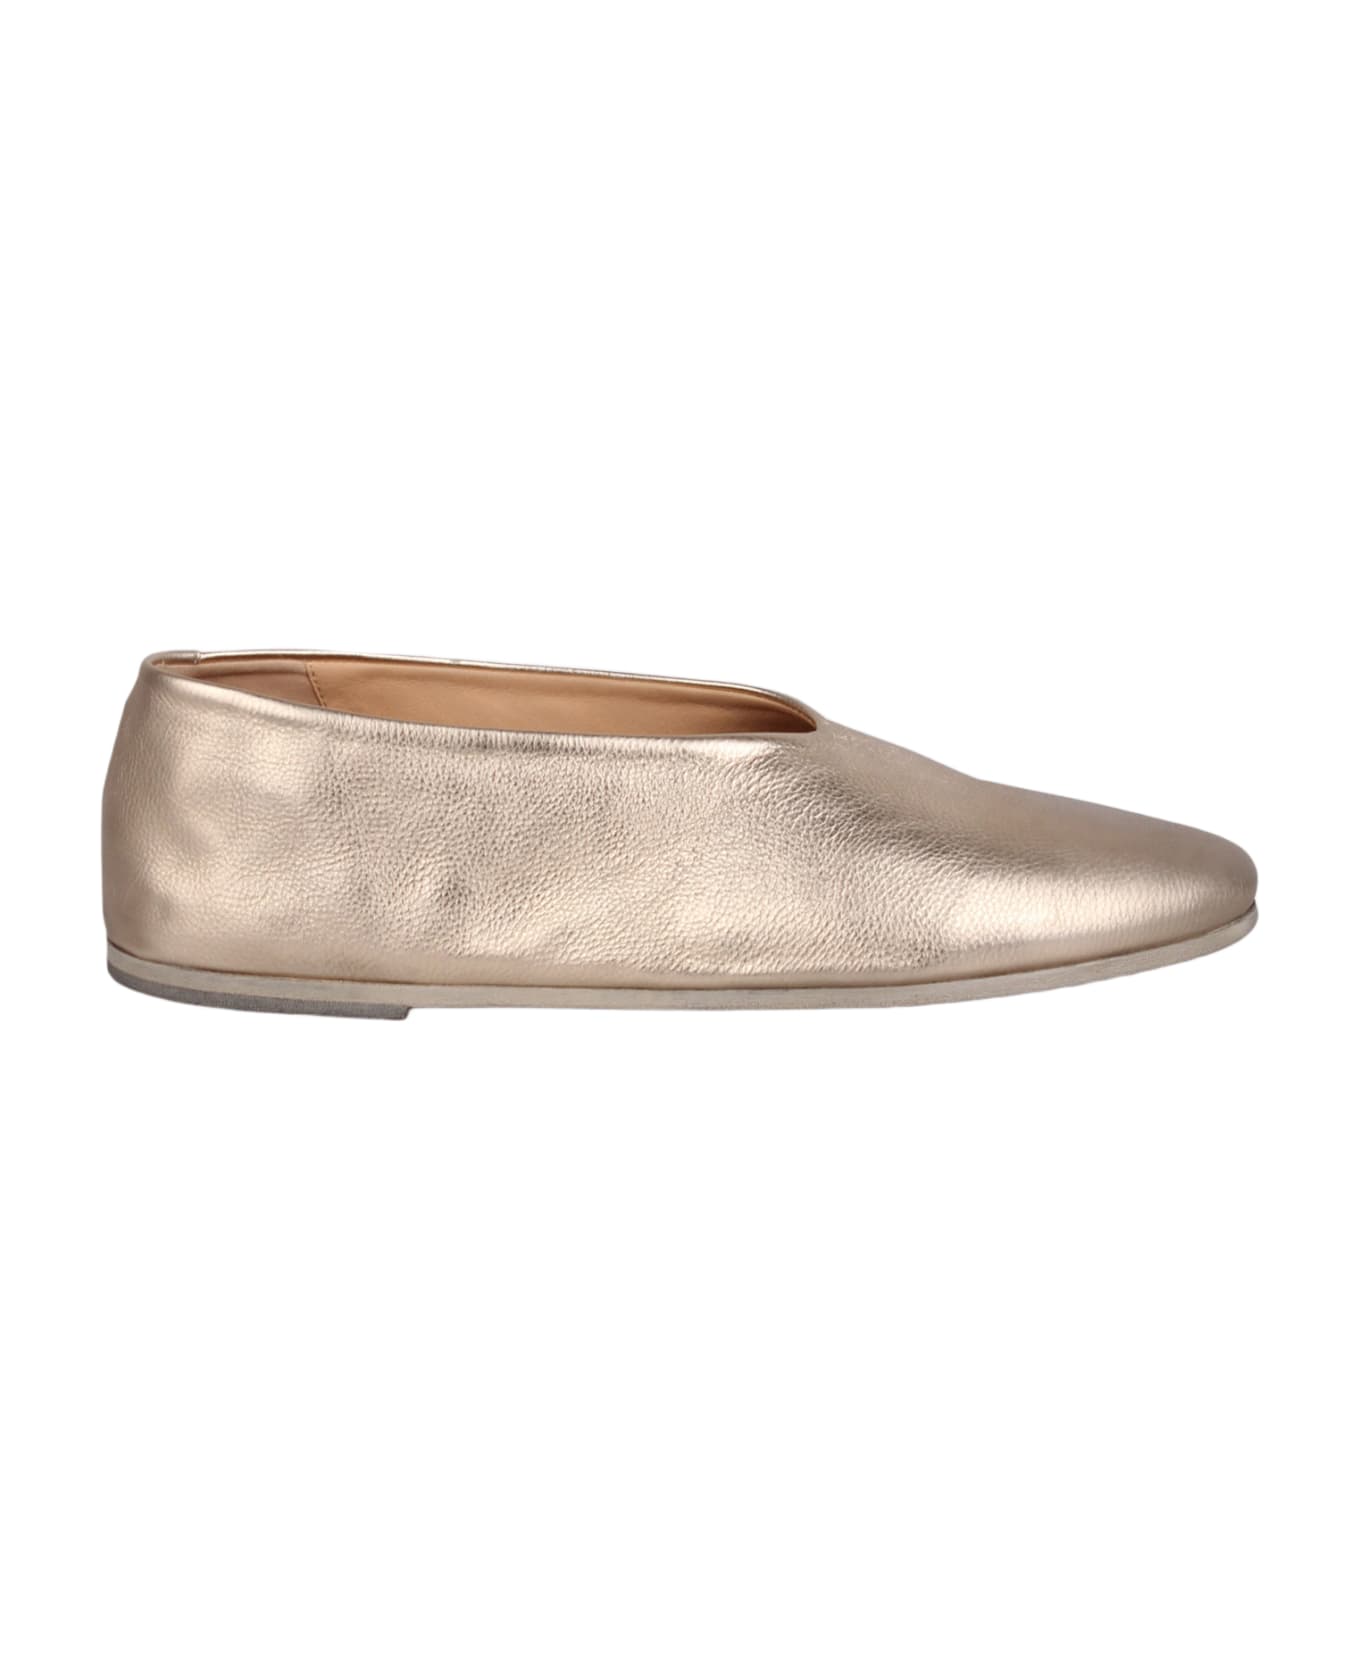 Marsell Almond Toe Ballerina Shoes